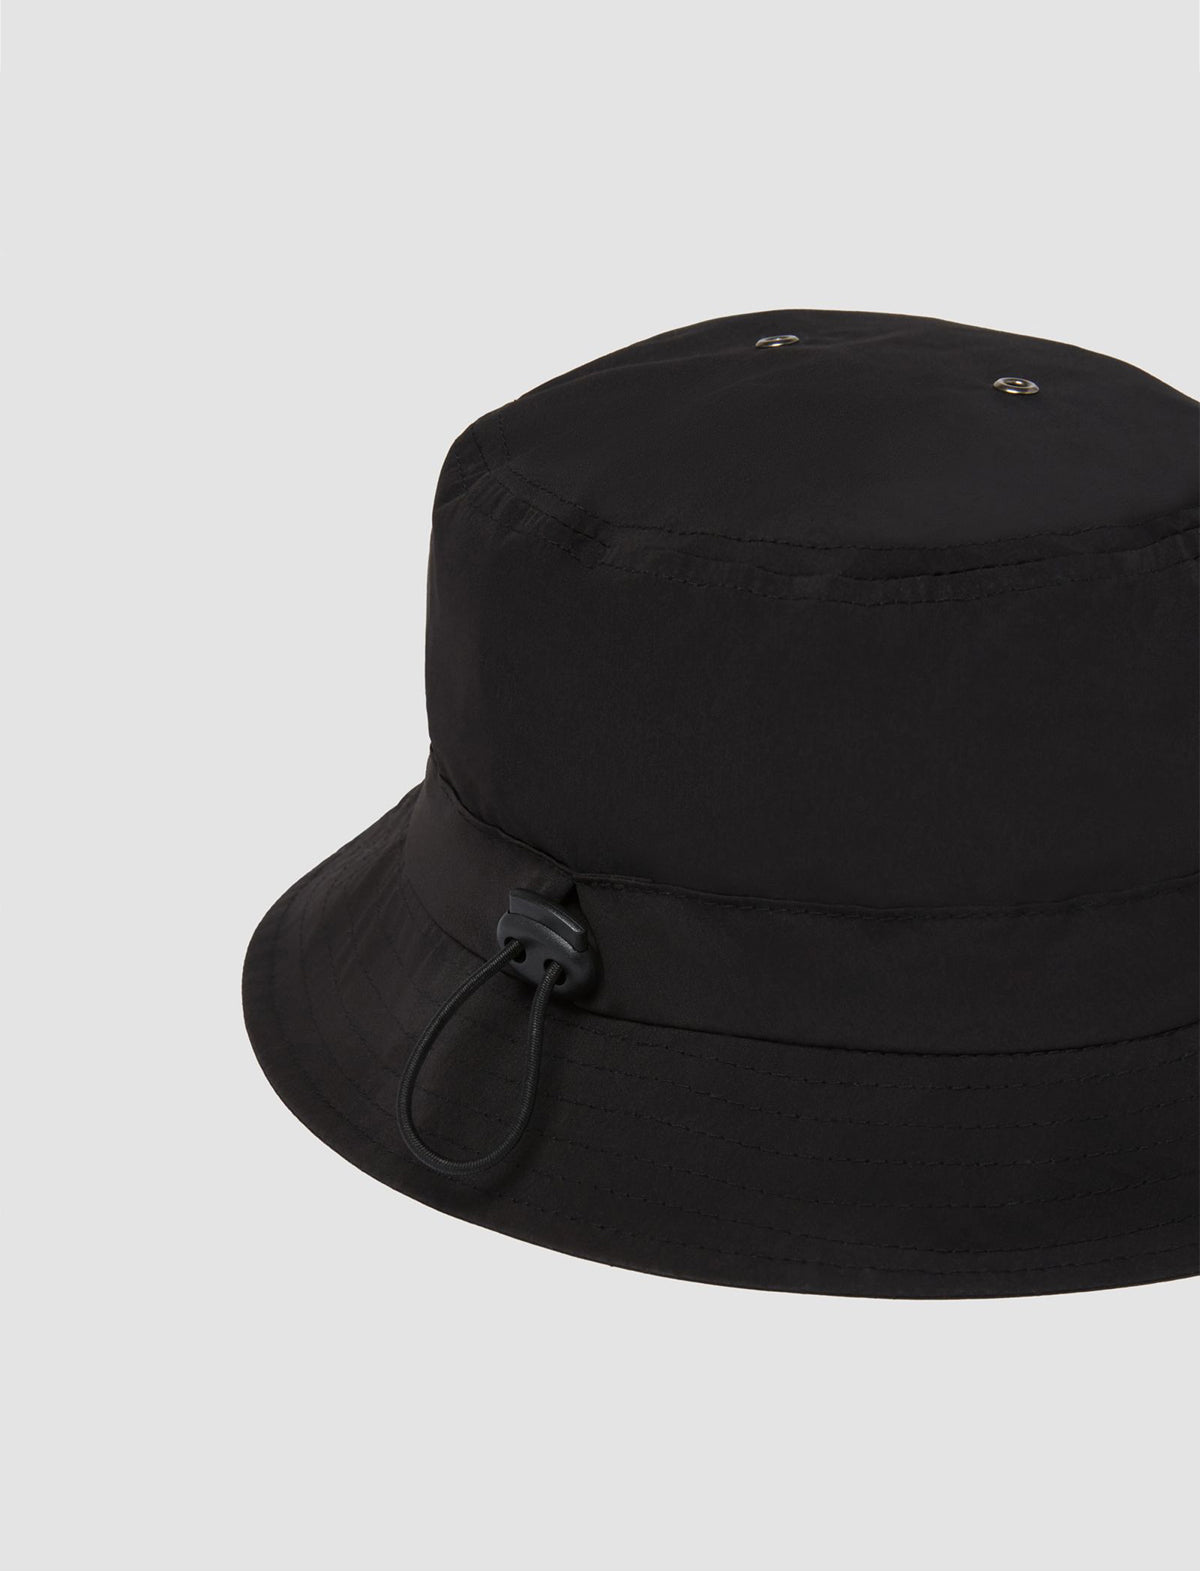 MANORS GOLF Ranger Bucket Hat In Black